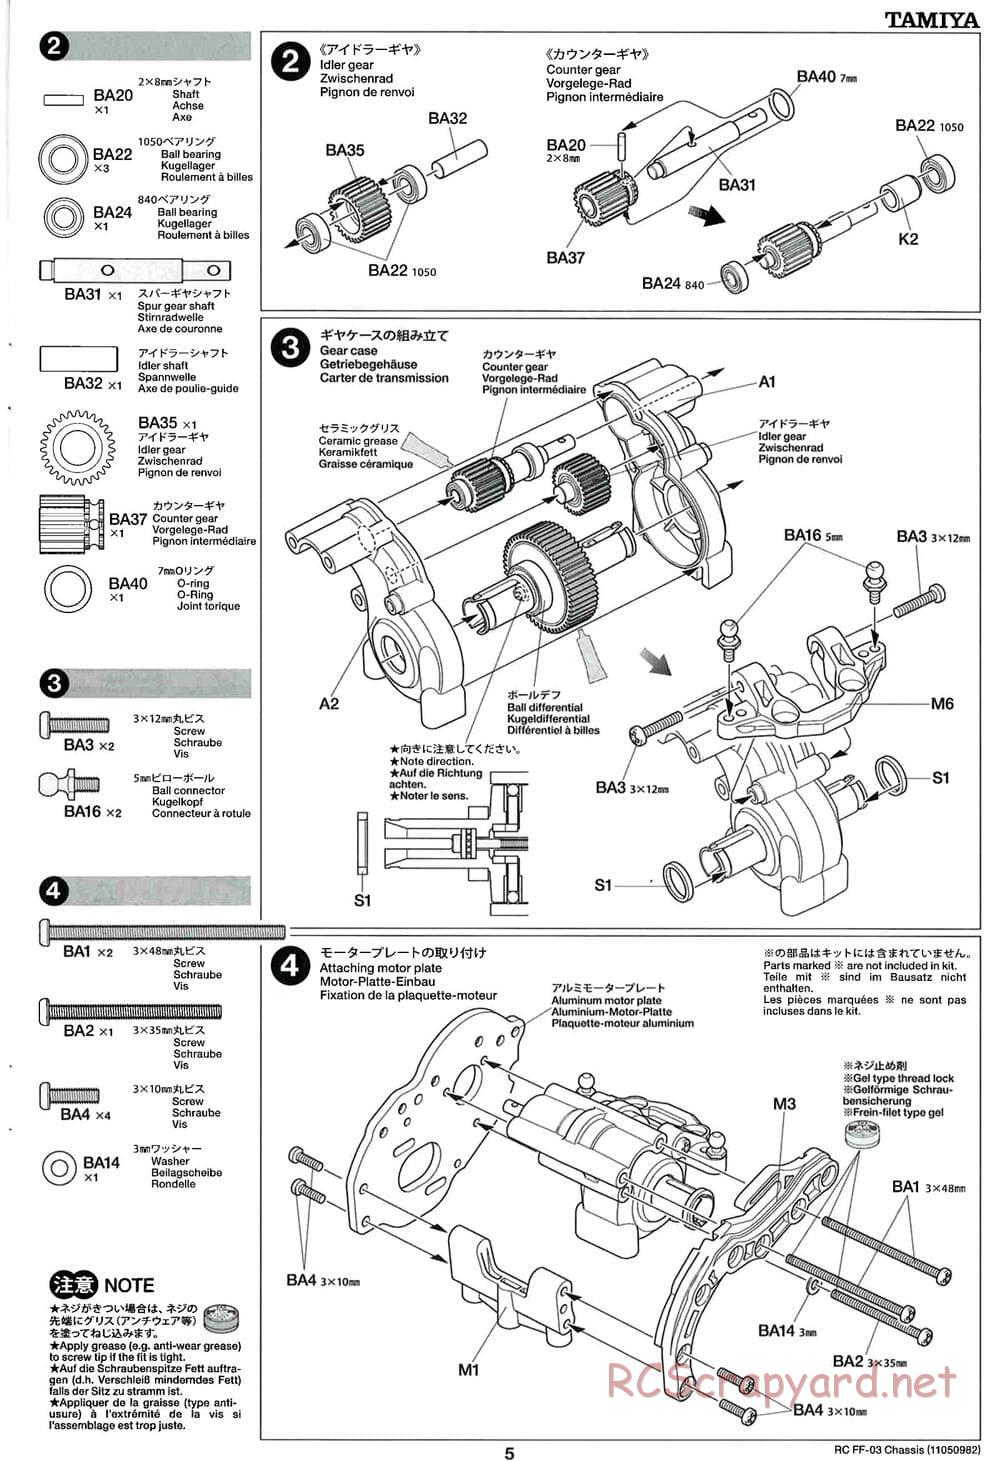 Tamiya - FF-03 Chassis - Manual - Page 5